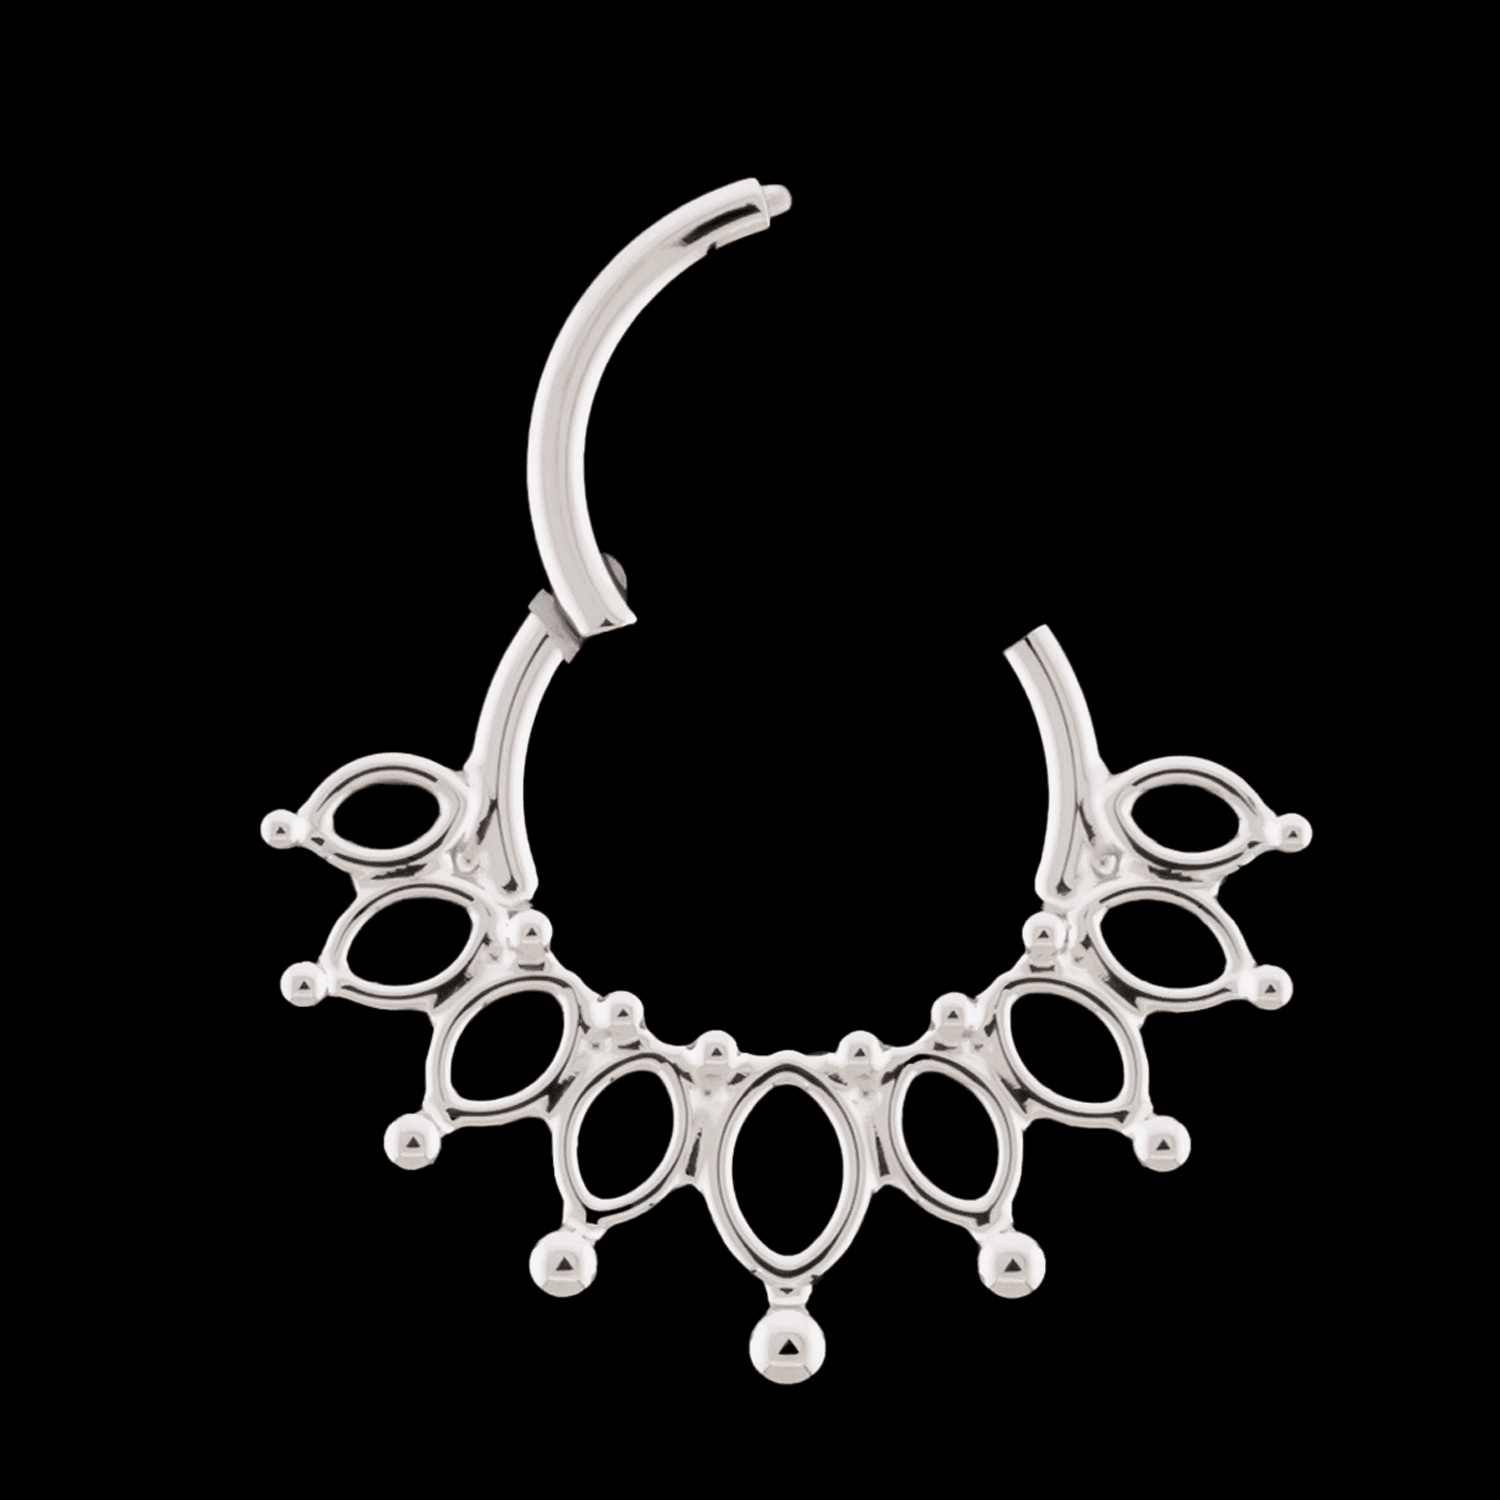 Cadence- Titanium Hinged Ring - Khrysos Jewelry